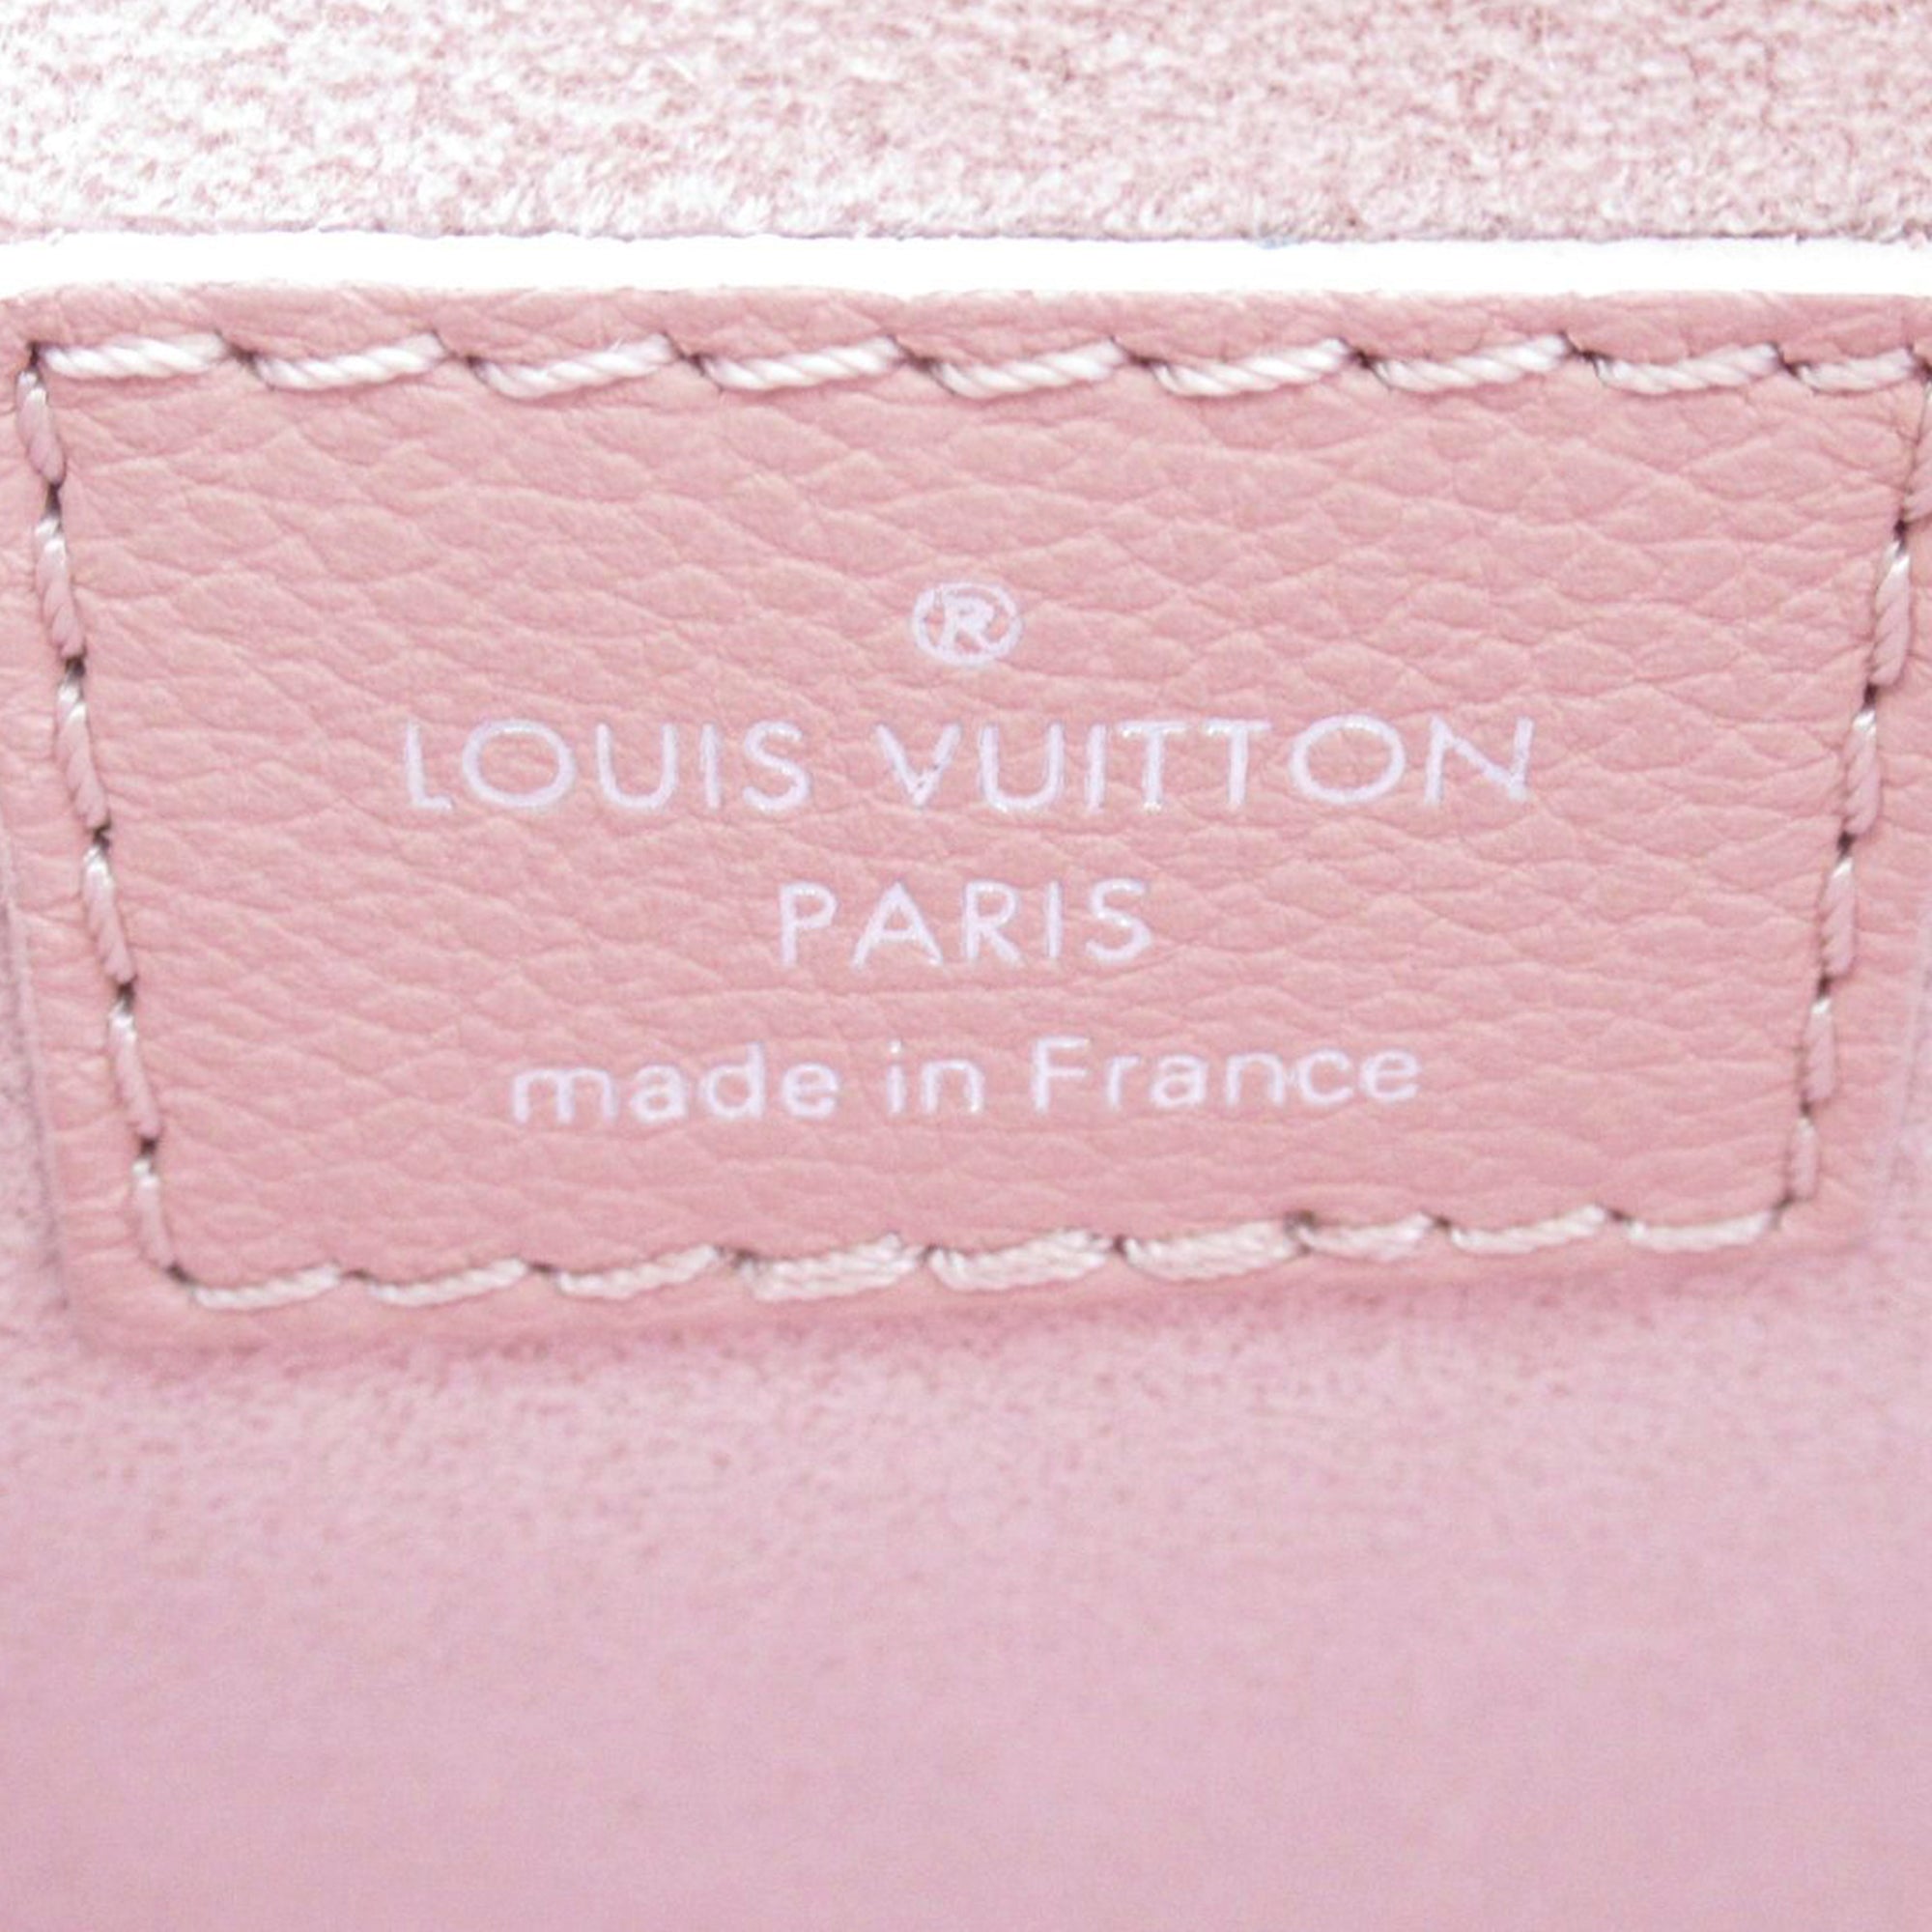 Louis Vuitton Lockme Cabas BB Blue Calfskin